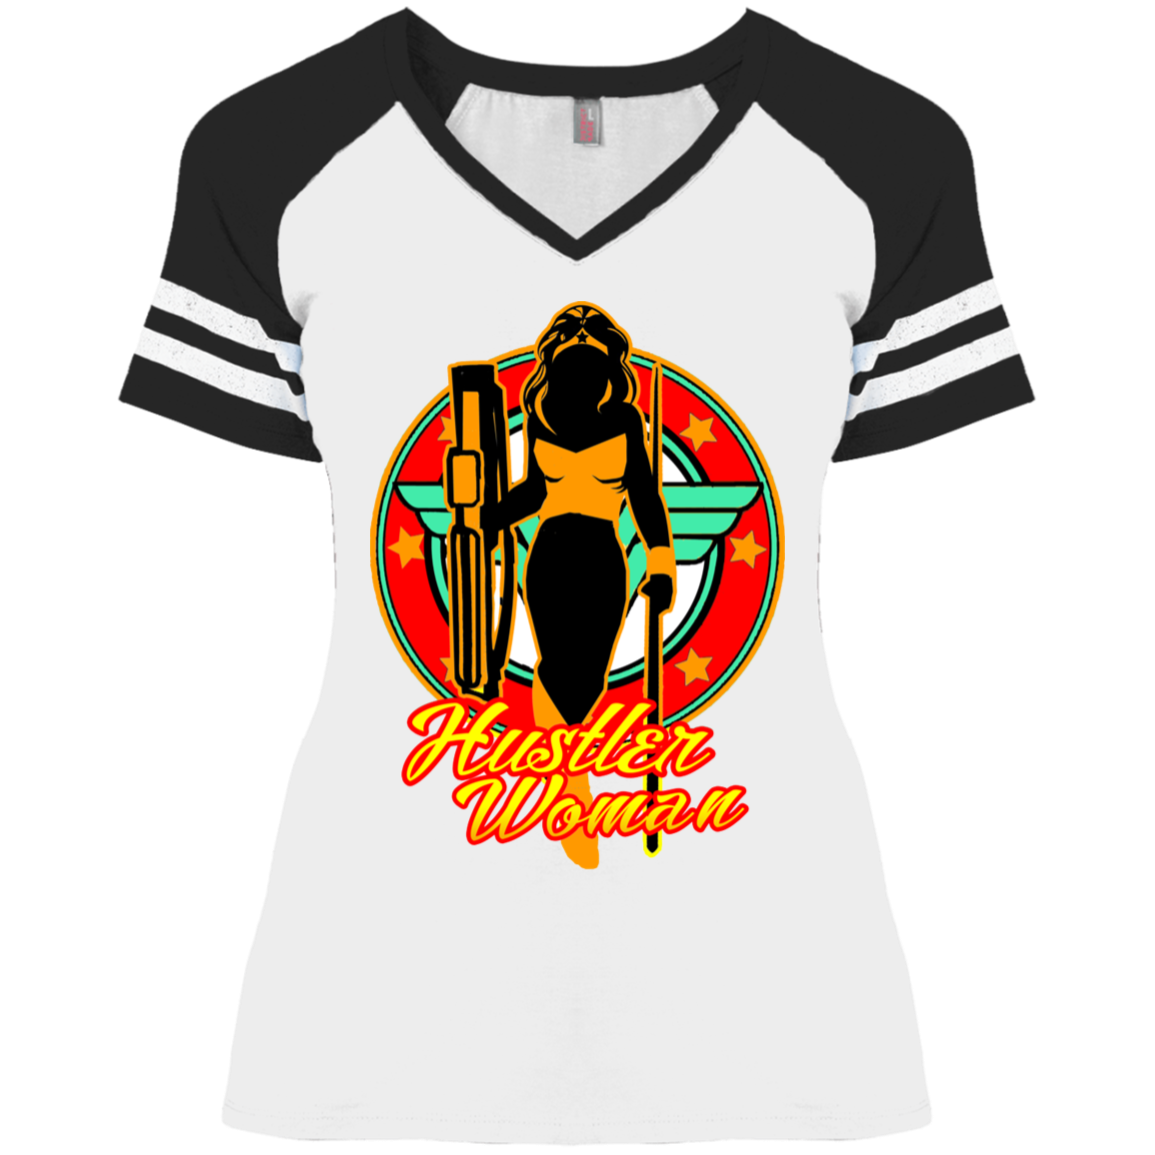 The GHOATS Custom Design #15. Hustler Woman. Ladies' Game V-Neck T-Shirt